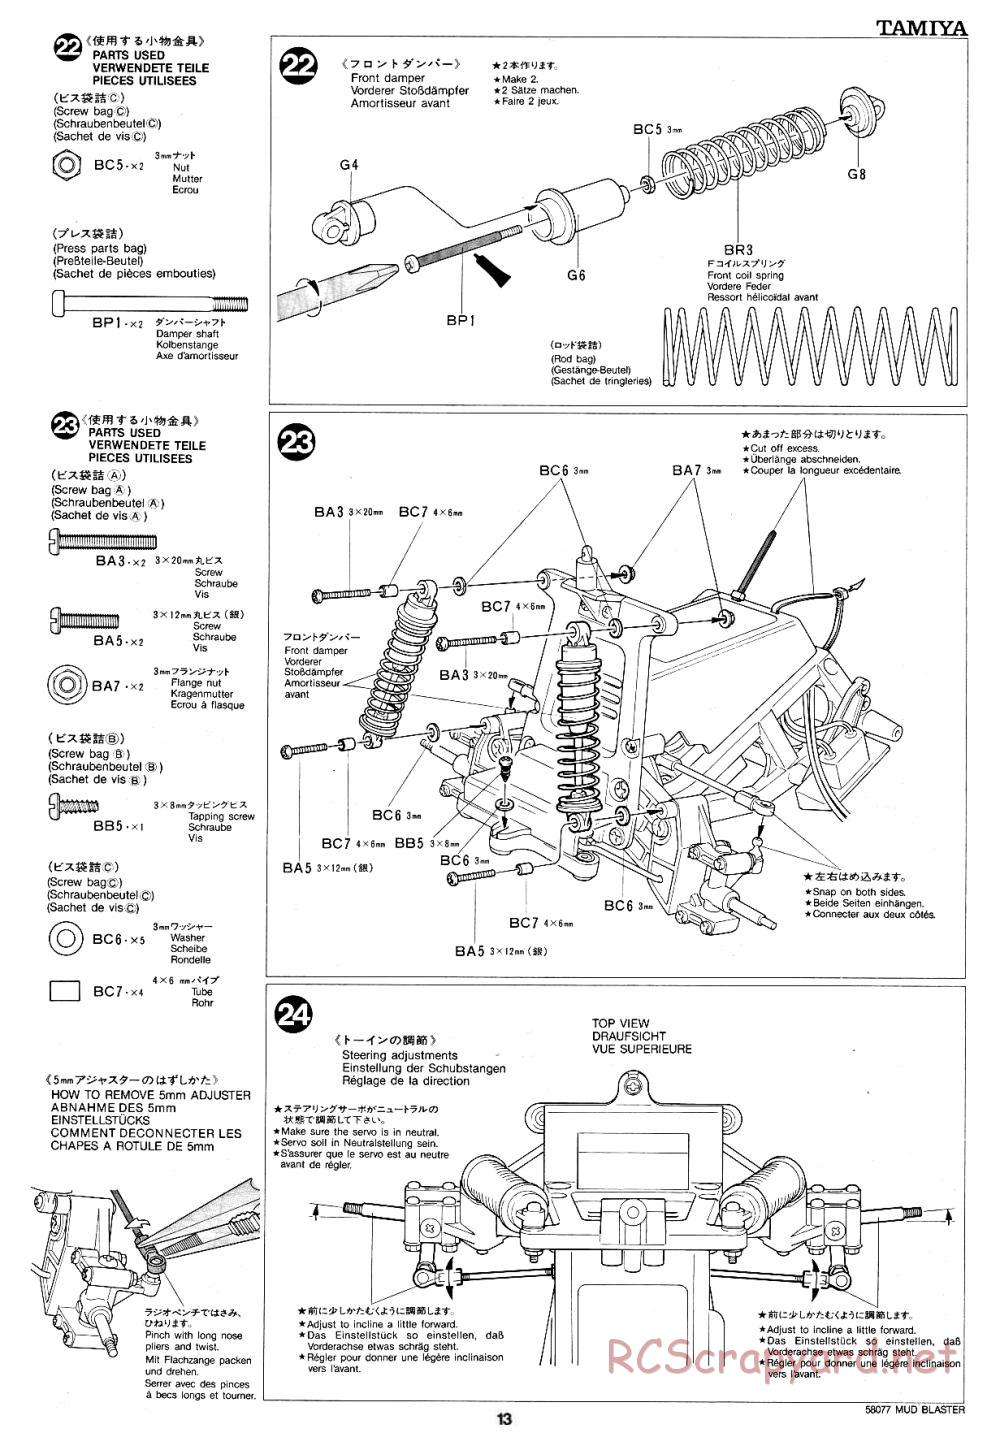 Tamiya - Mud Blaster - 58077 - Manual - Page 13